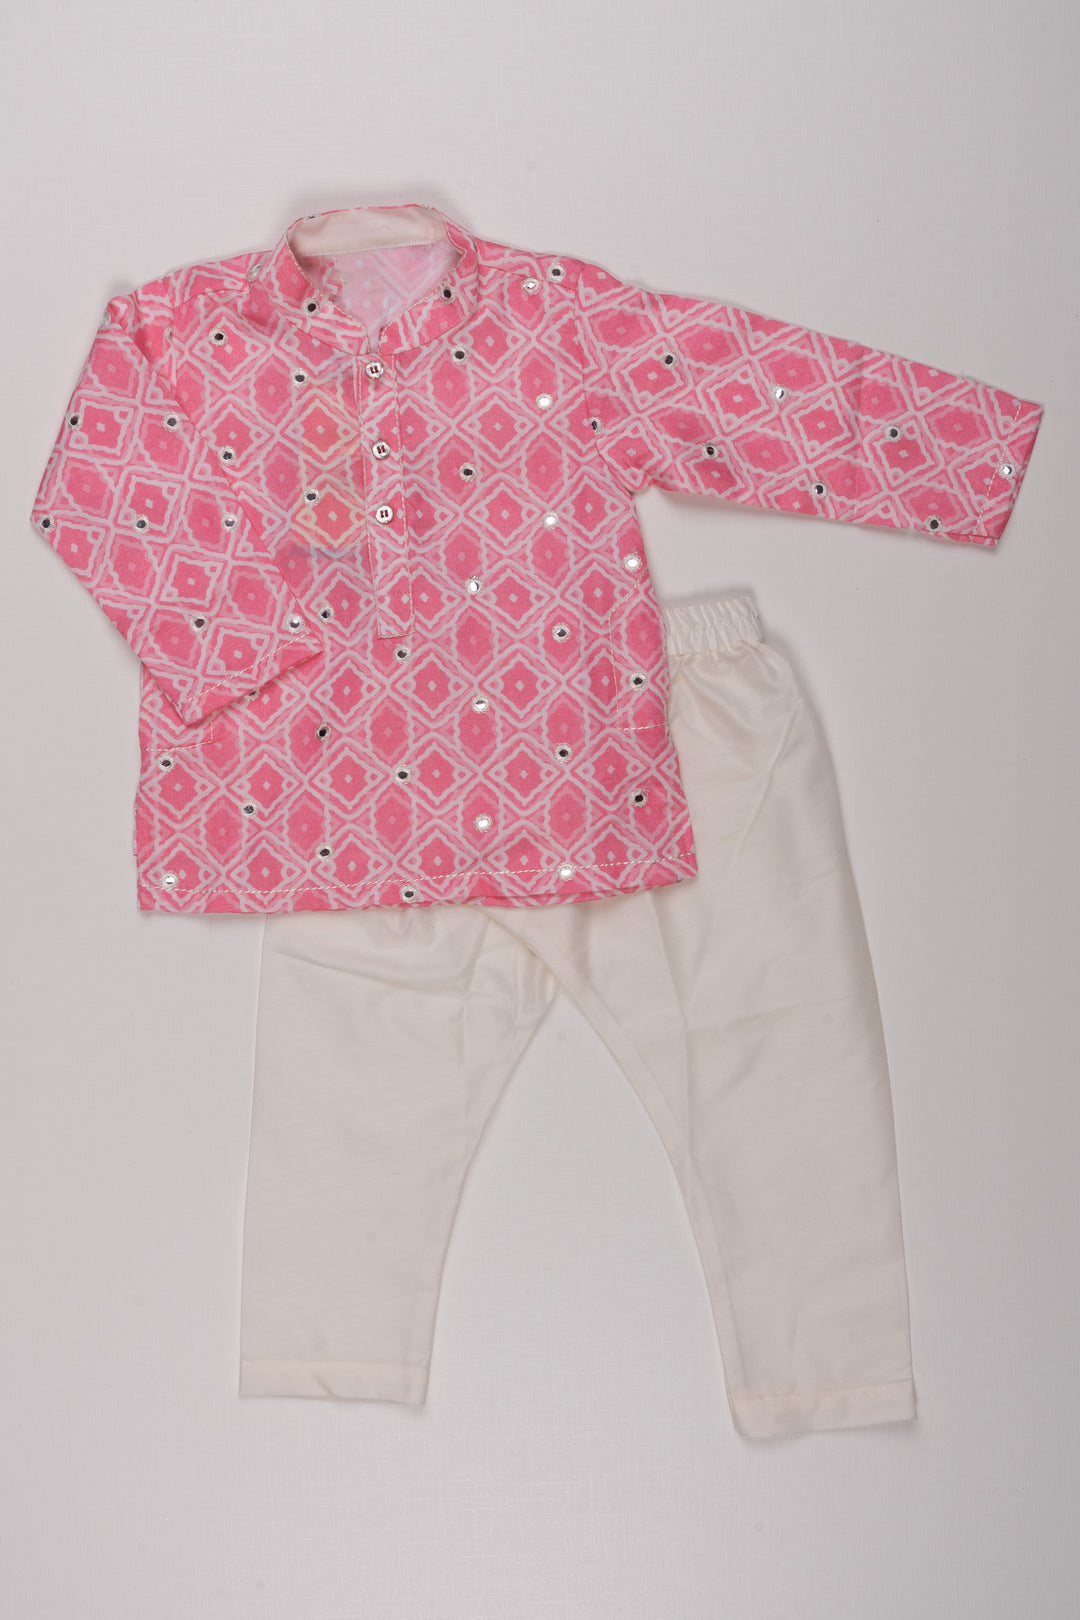 The Nesavu Boys Kurtha Set Blush Blossom: Mirror-Embroidered Geometric Printed Pink Kurta Shirt & Pant Set for Boys Nesavu 14 (6M) / Pink / Cotton BES400D-14 Boys Ethnic Kurta Pant Ensemble | Festive Indian Outfits | The Nesavu